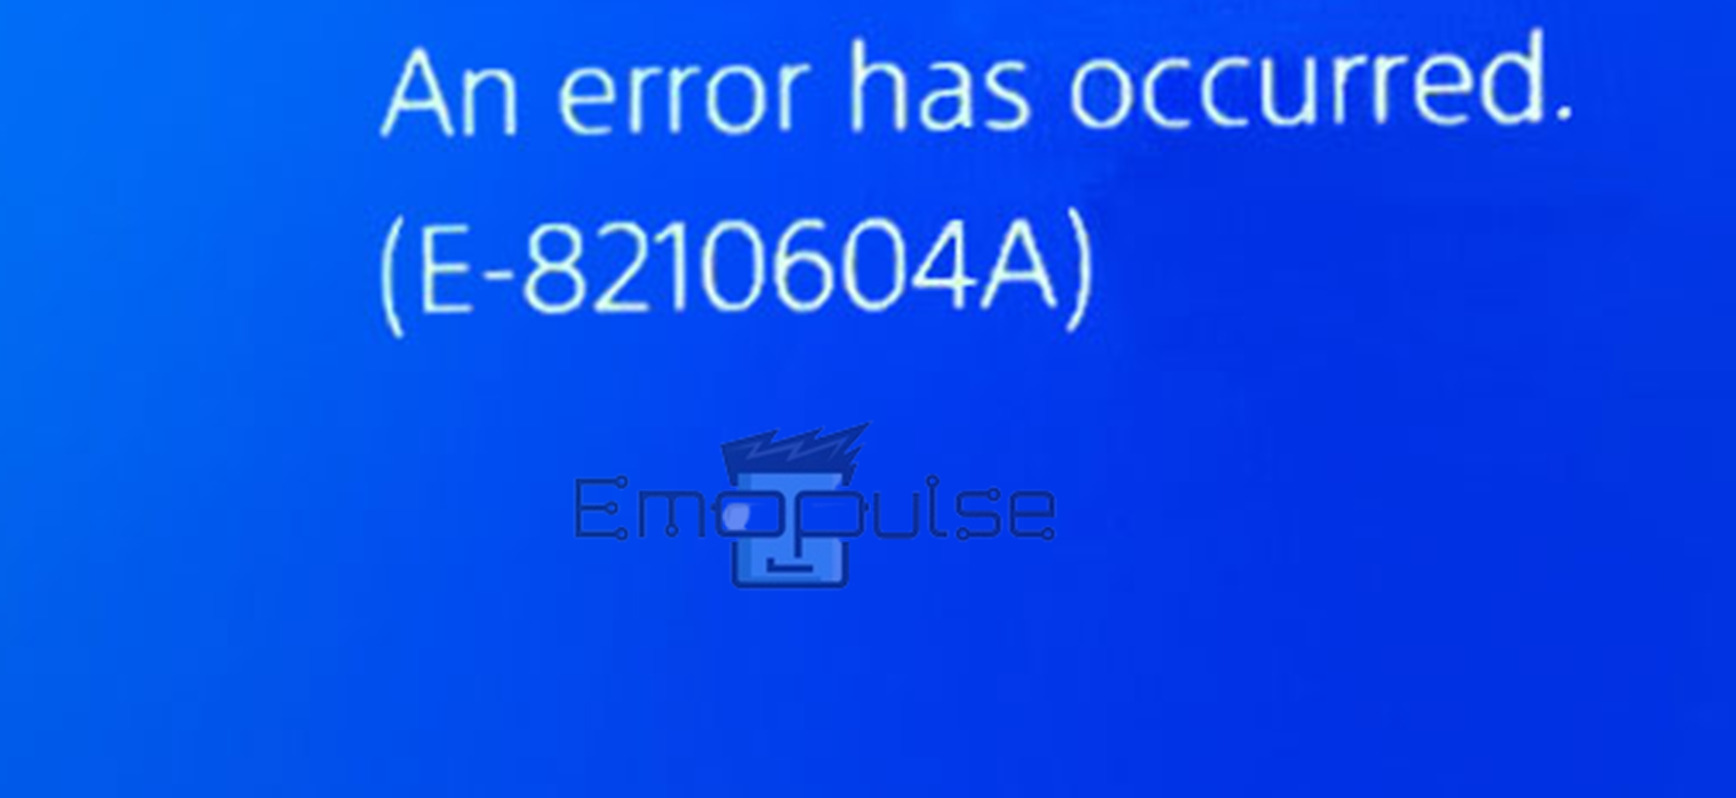 PlayStation error code E-8210604A image 